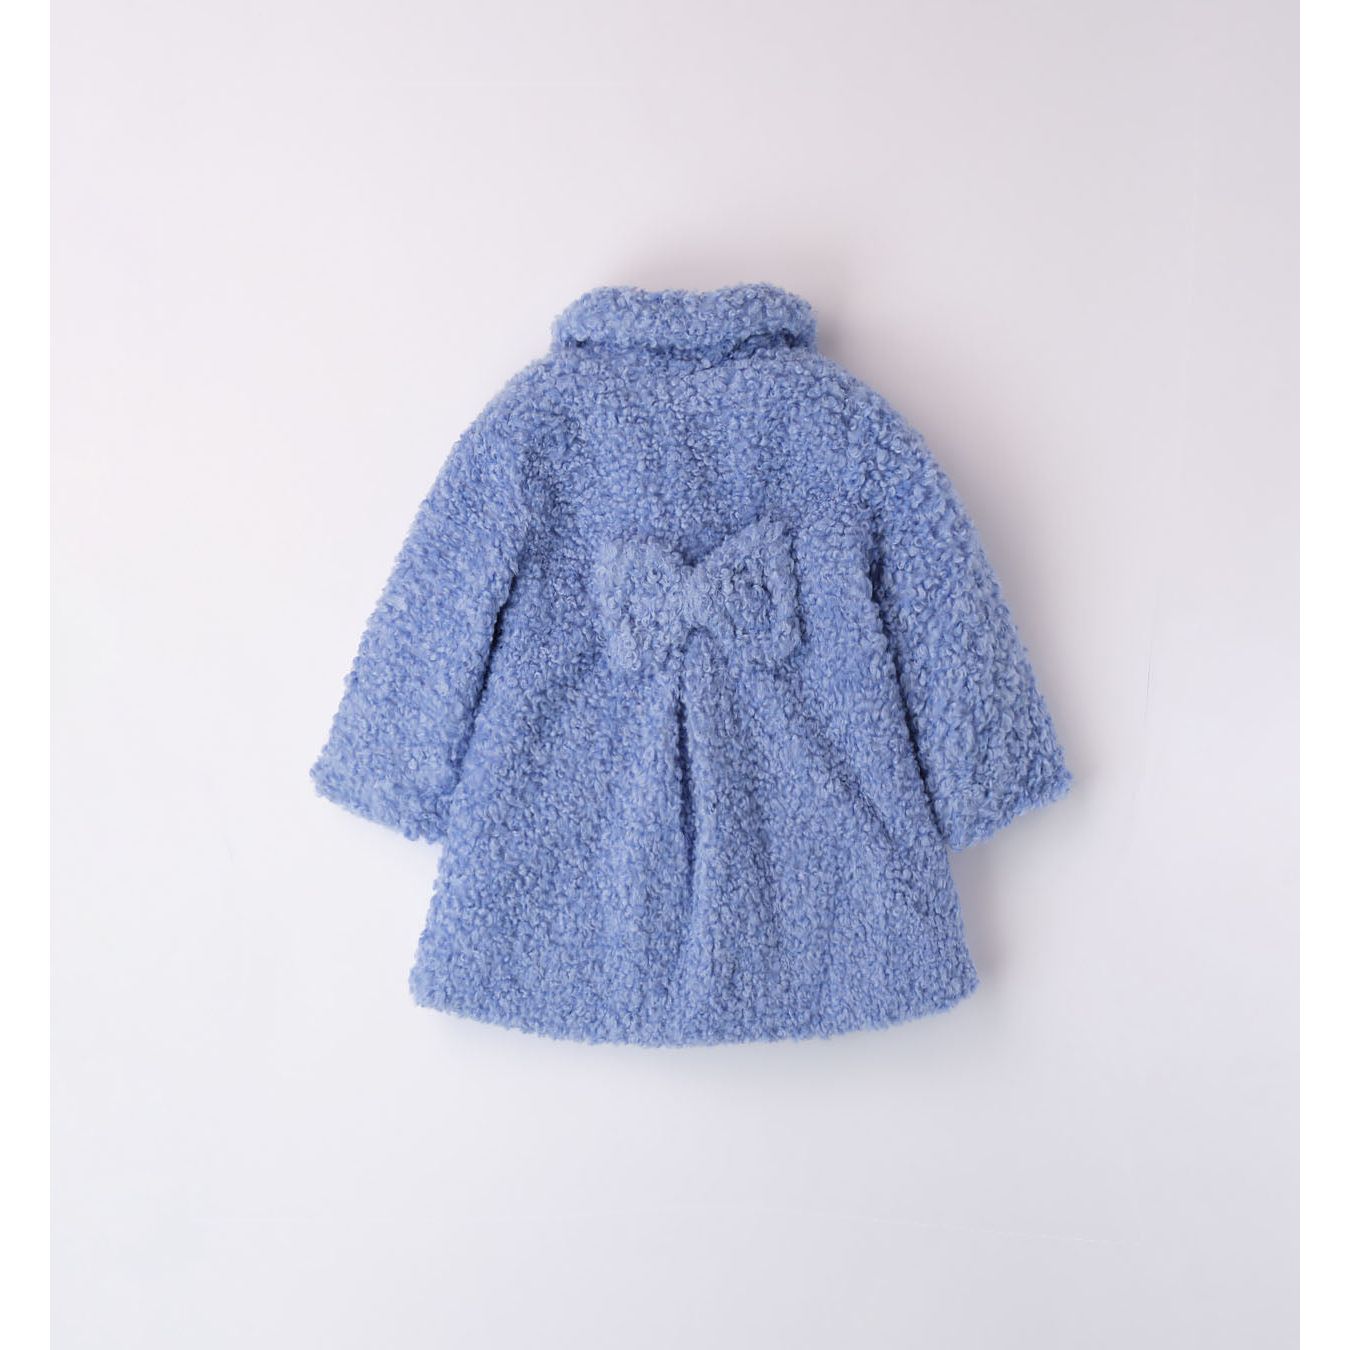 Powder Blue Teddy Coat 3219 - Lala Kids 